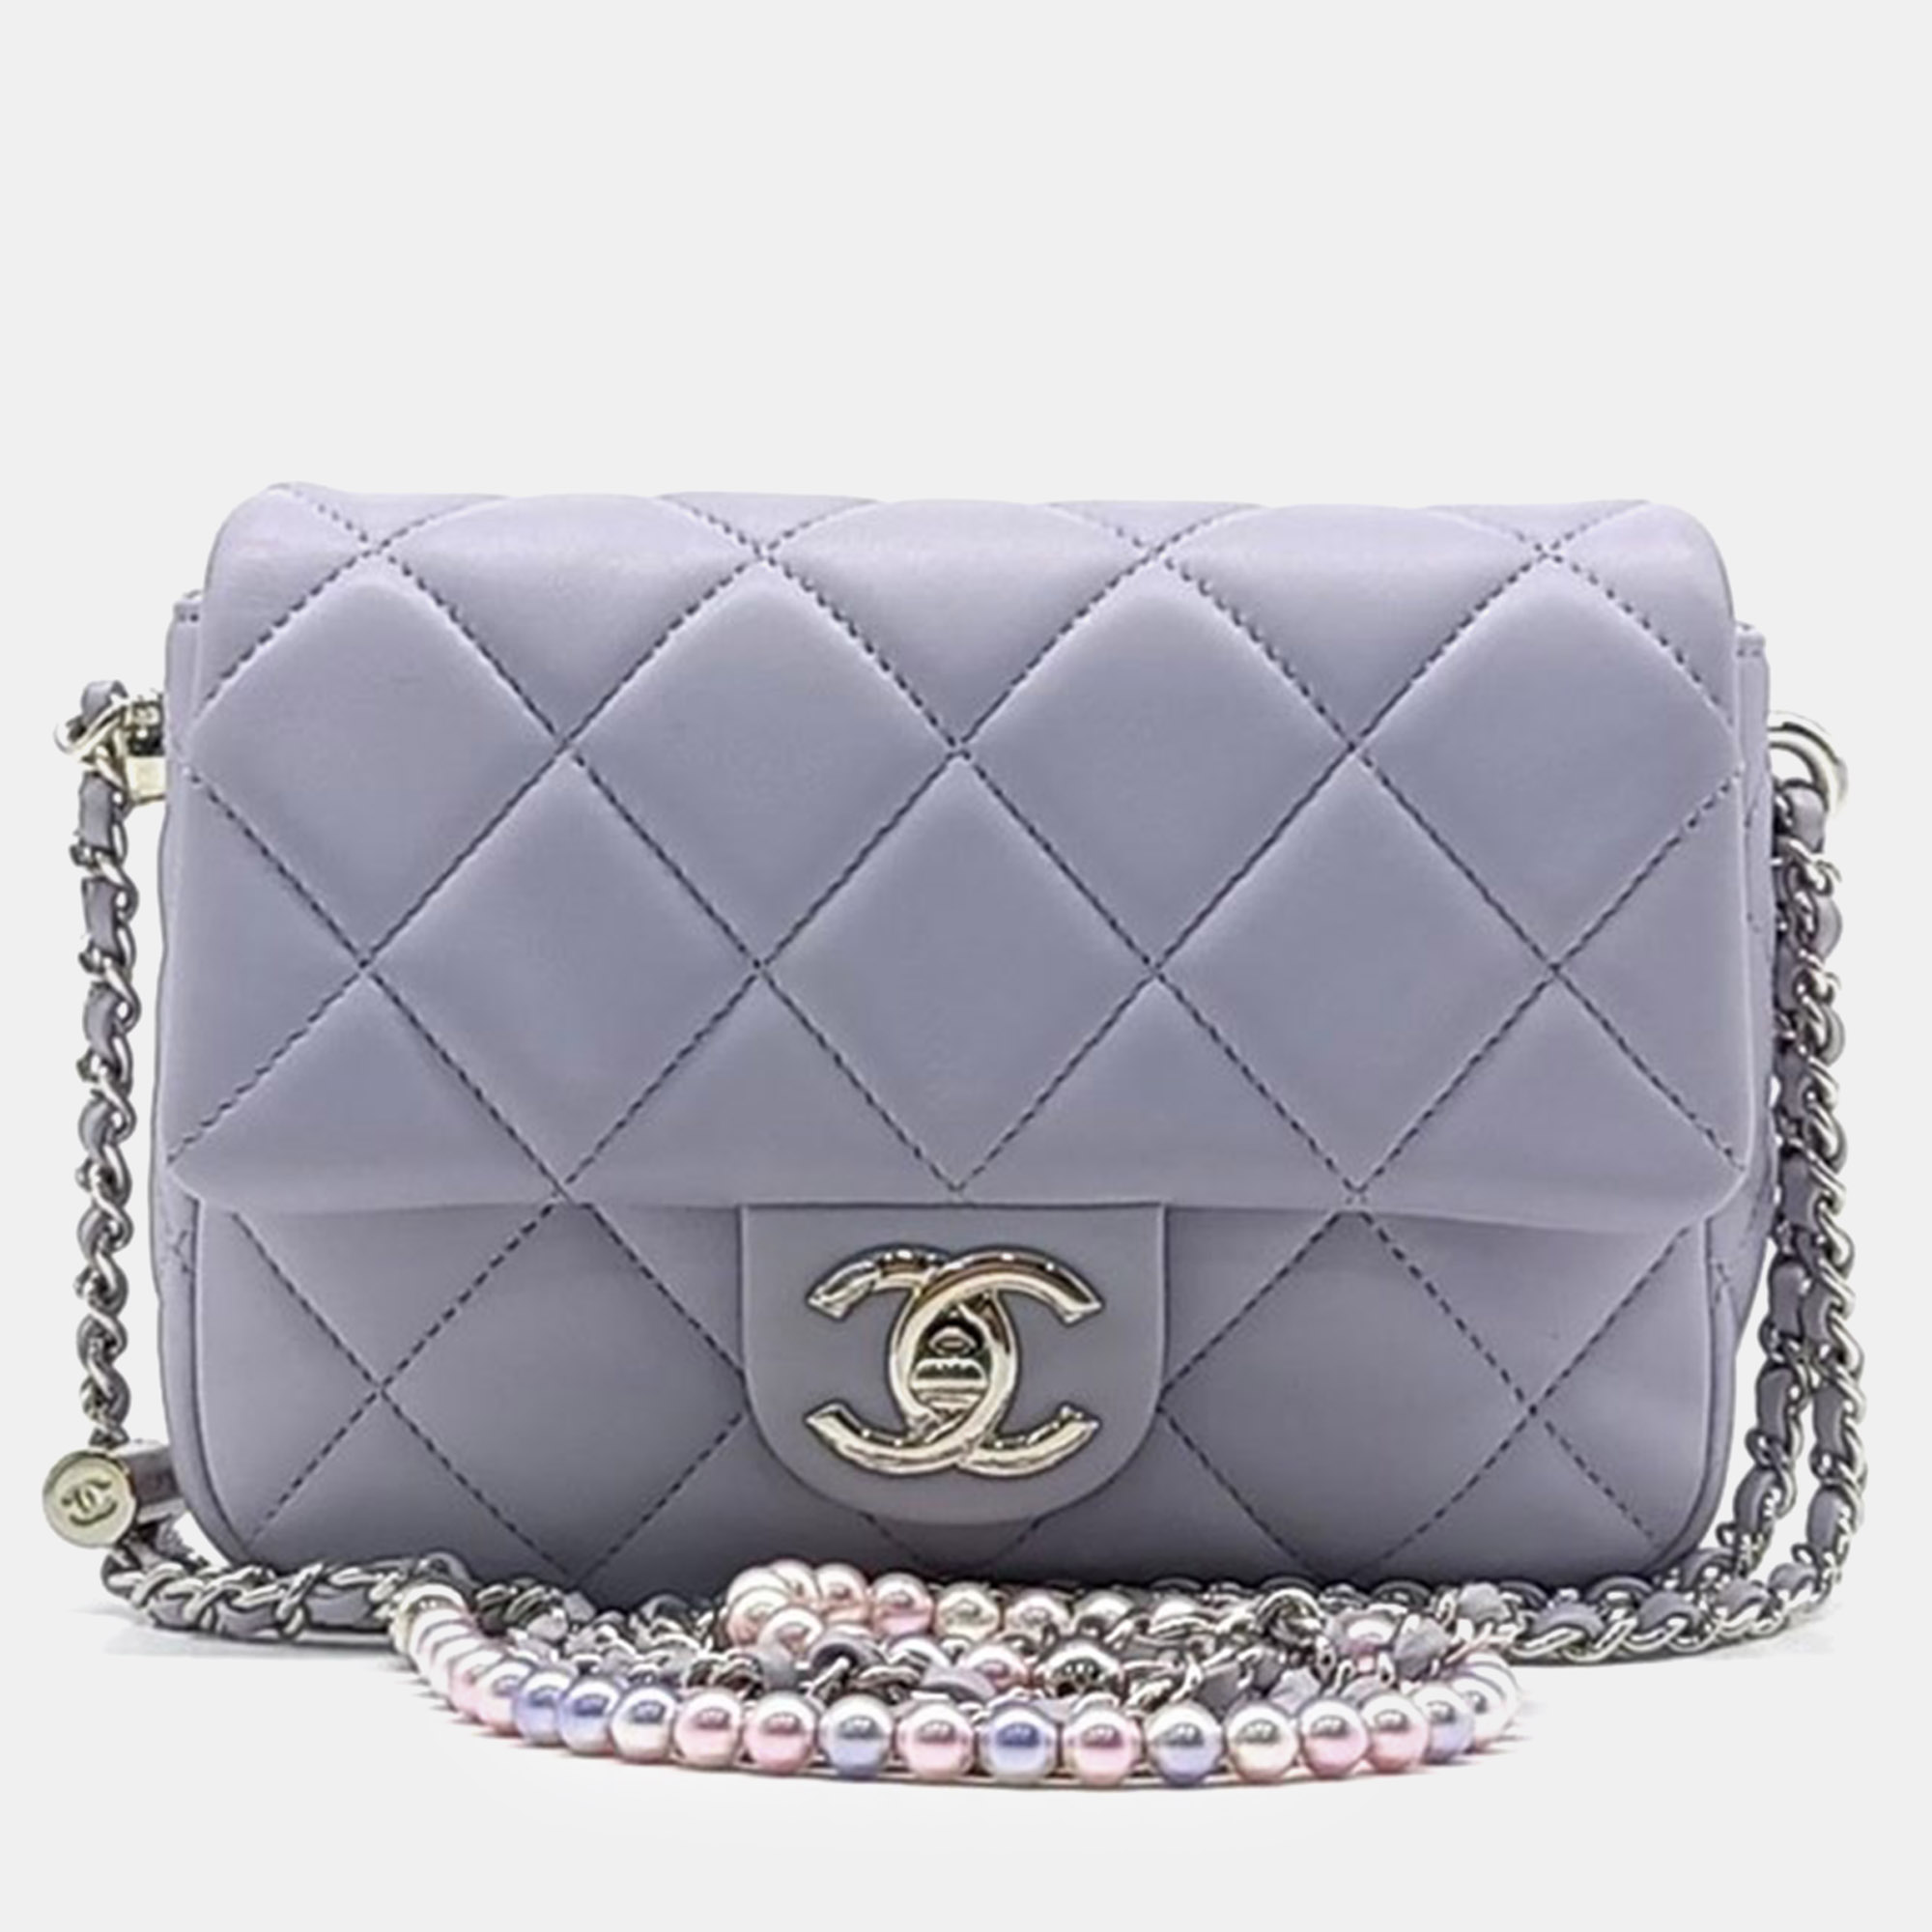 Chanel purple leather mini crush flap bag